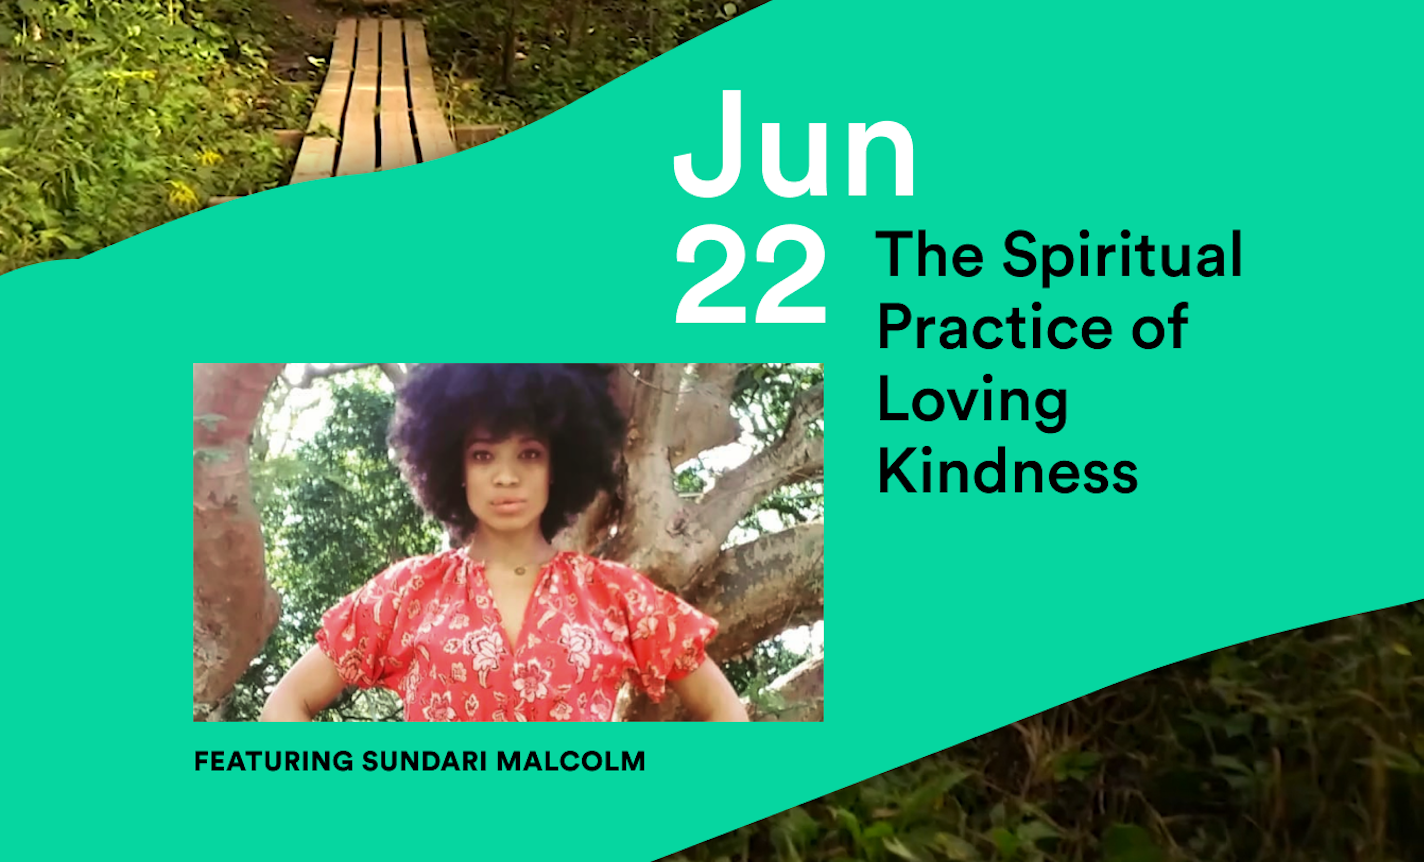 The Spiritual Practice of Loving Kindness